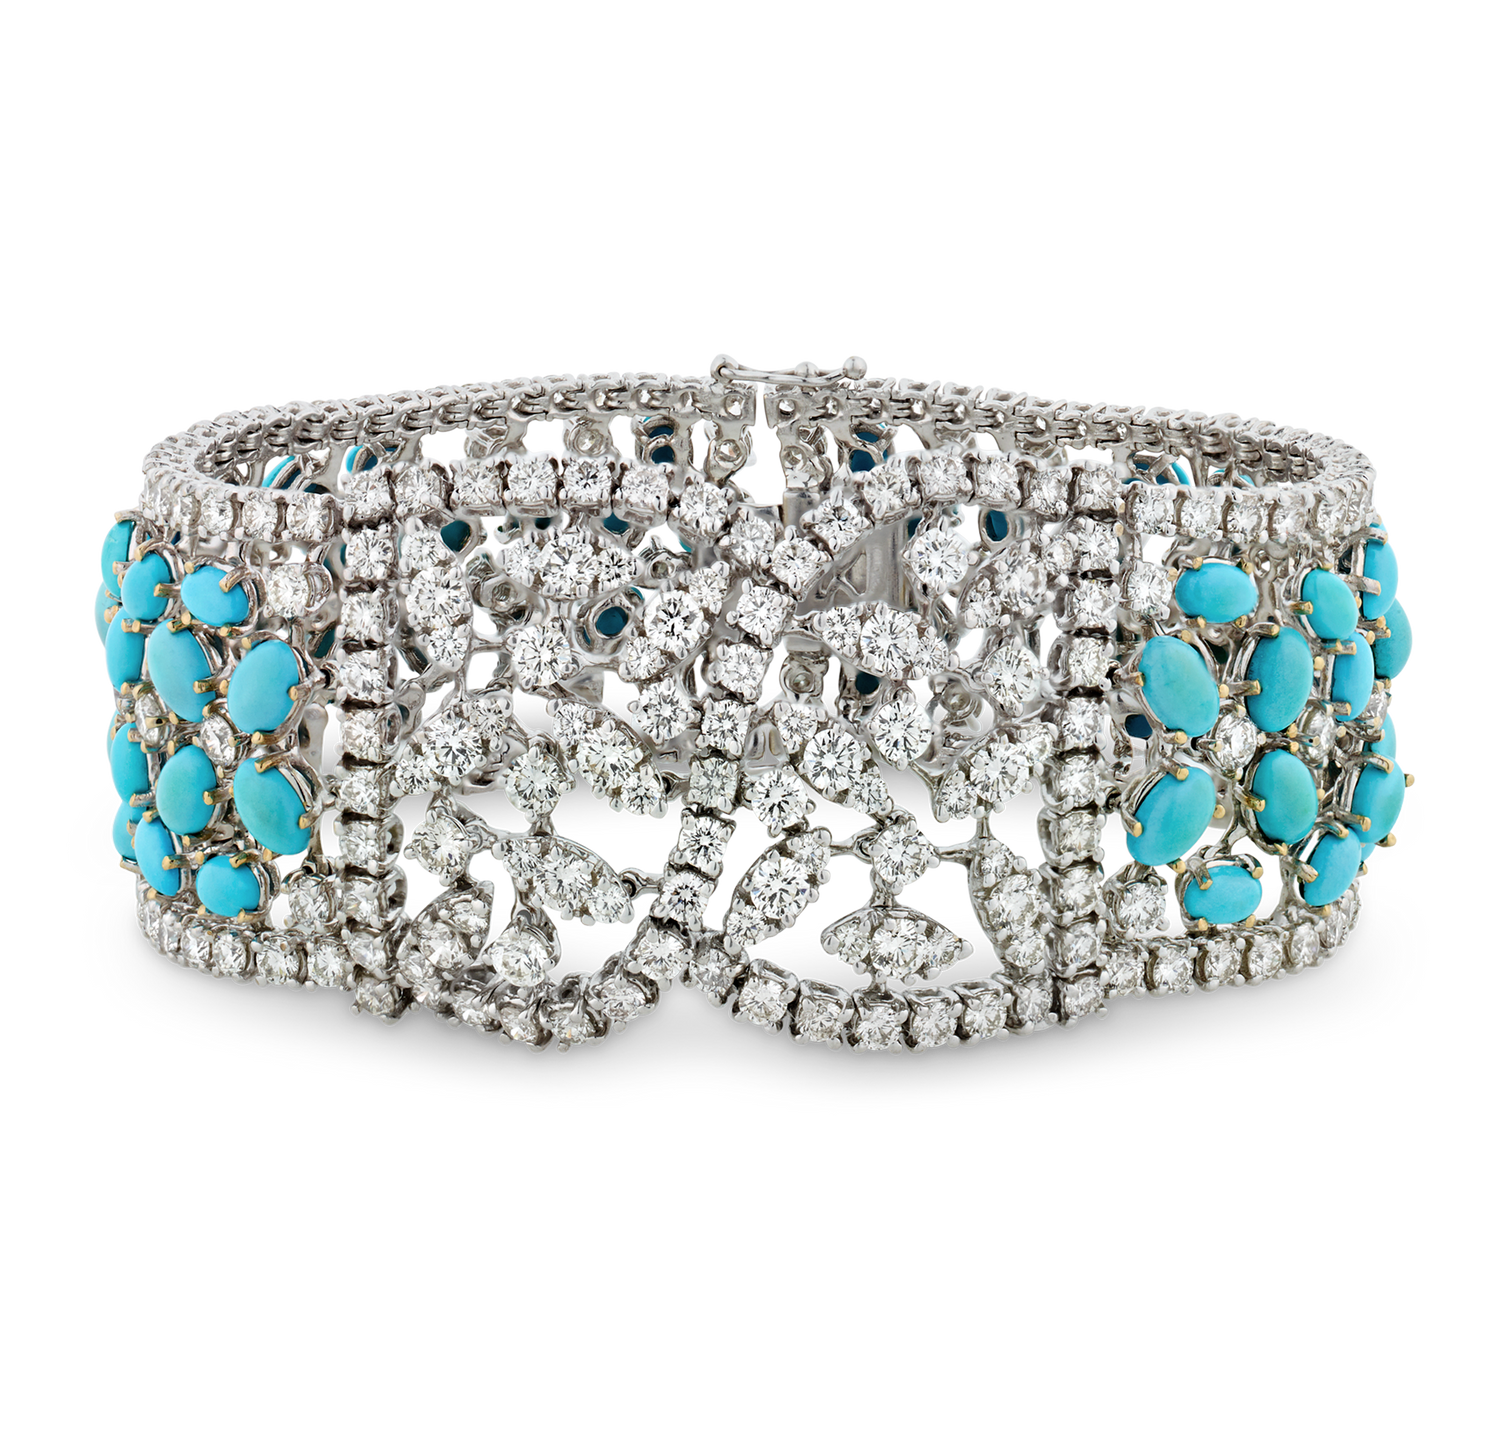 Diamond and Turquoise Bracelet